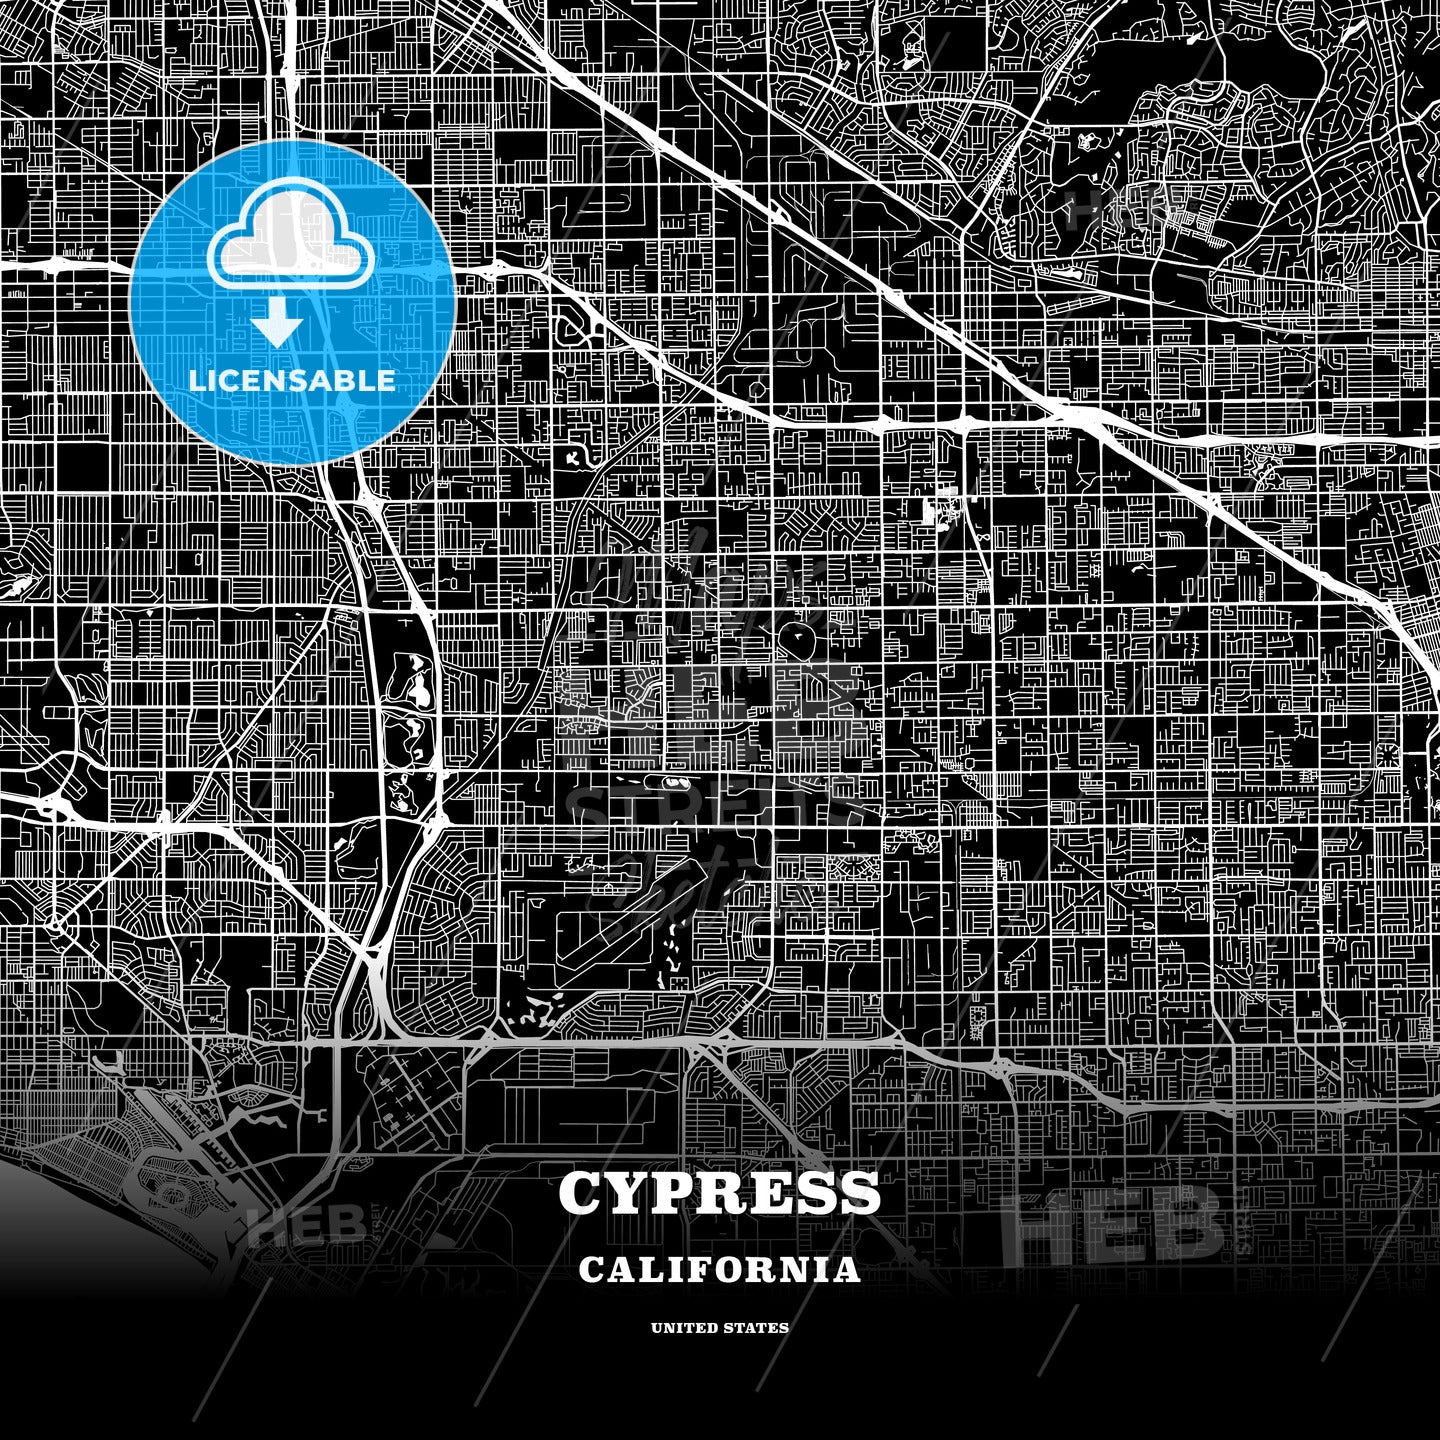 Cypress, California, USA map